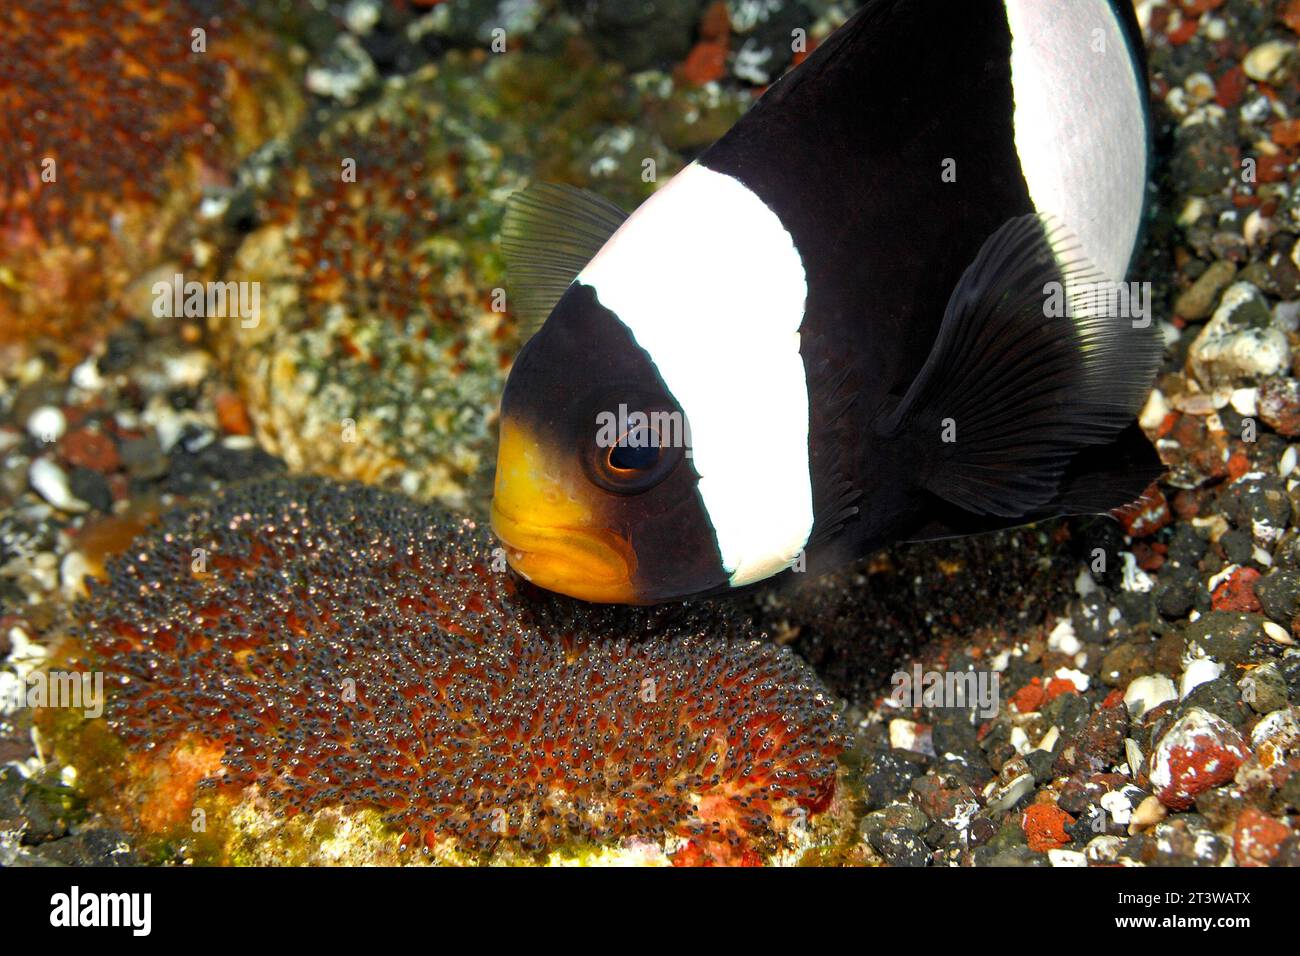 Saddleback Anemonefish, Amphiprion polymnus, adult guarding eggs  on rock beside Haddon's Sea Anemone, Stichodactyla haddoni. Developing eyes seen Stock Photo